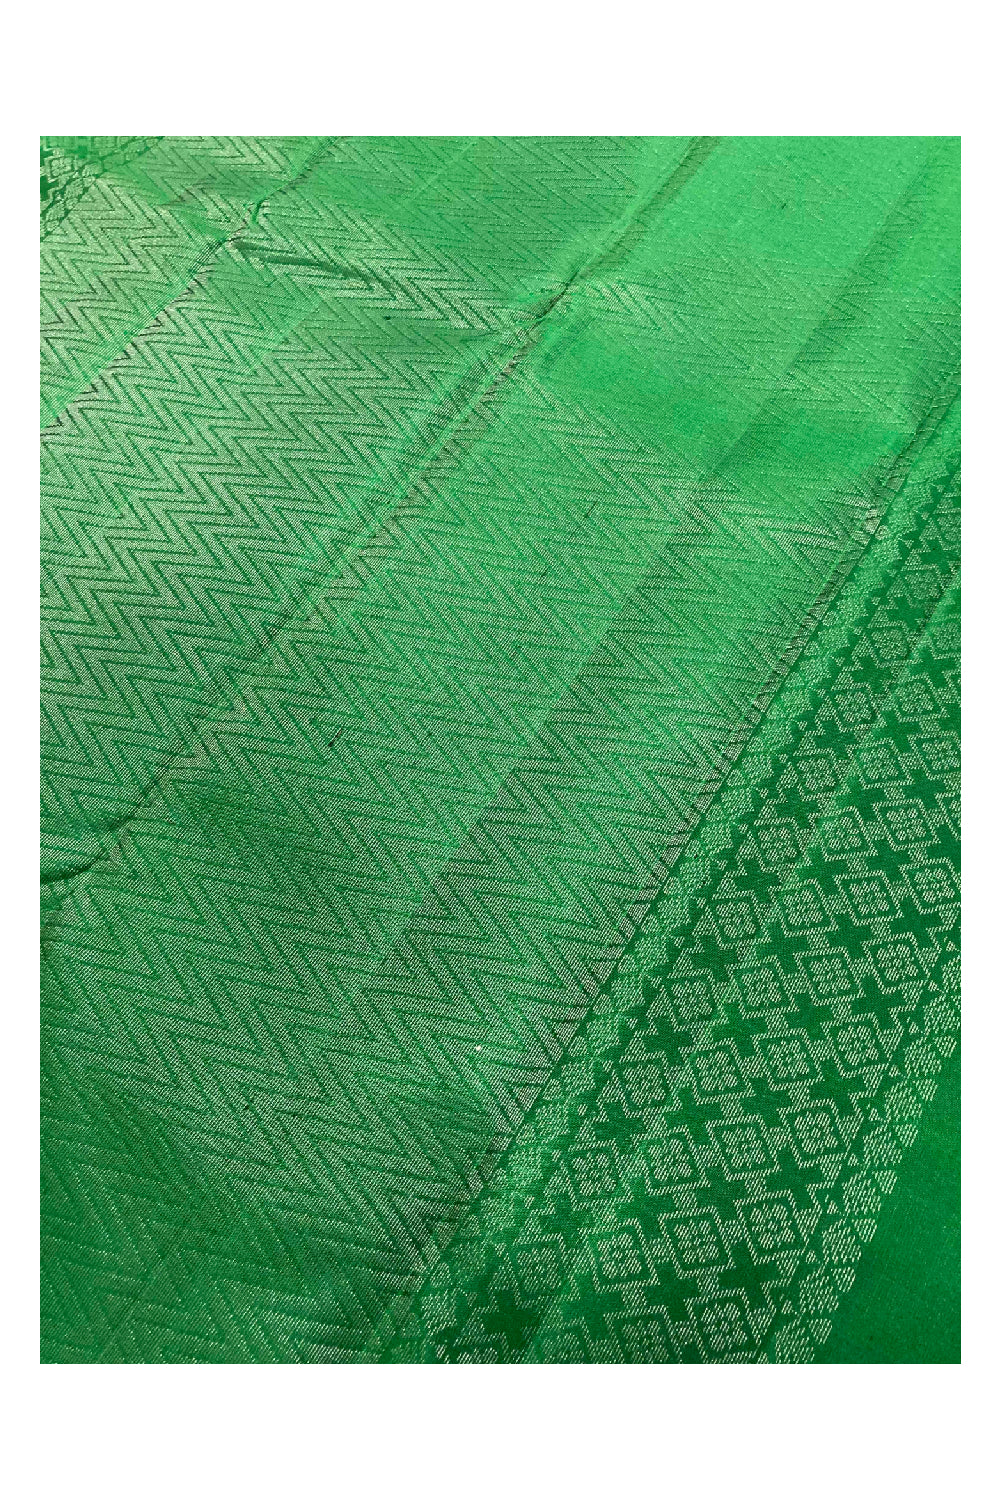 Southloom Handloom Pure Silk Manthrakodi Kanchipuram Saree in Single Green Colour and Silver Zari Motifs